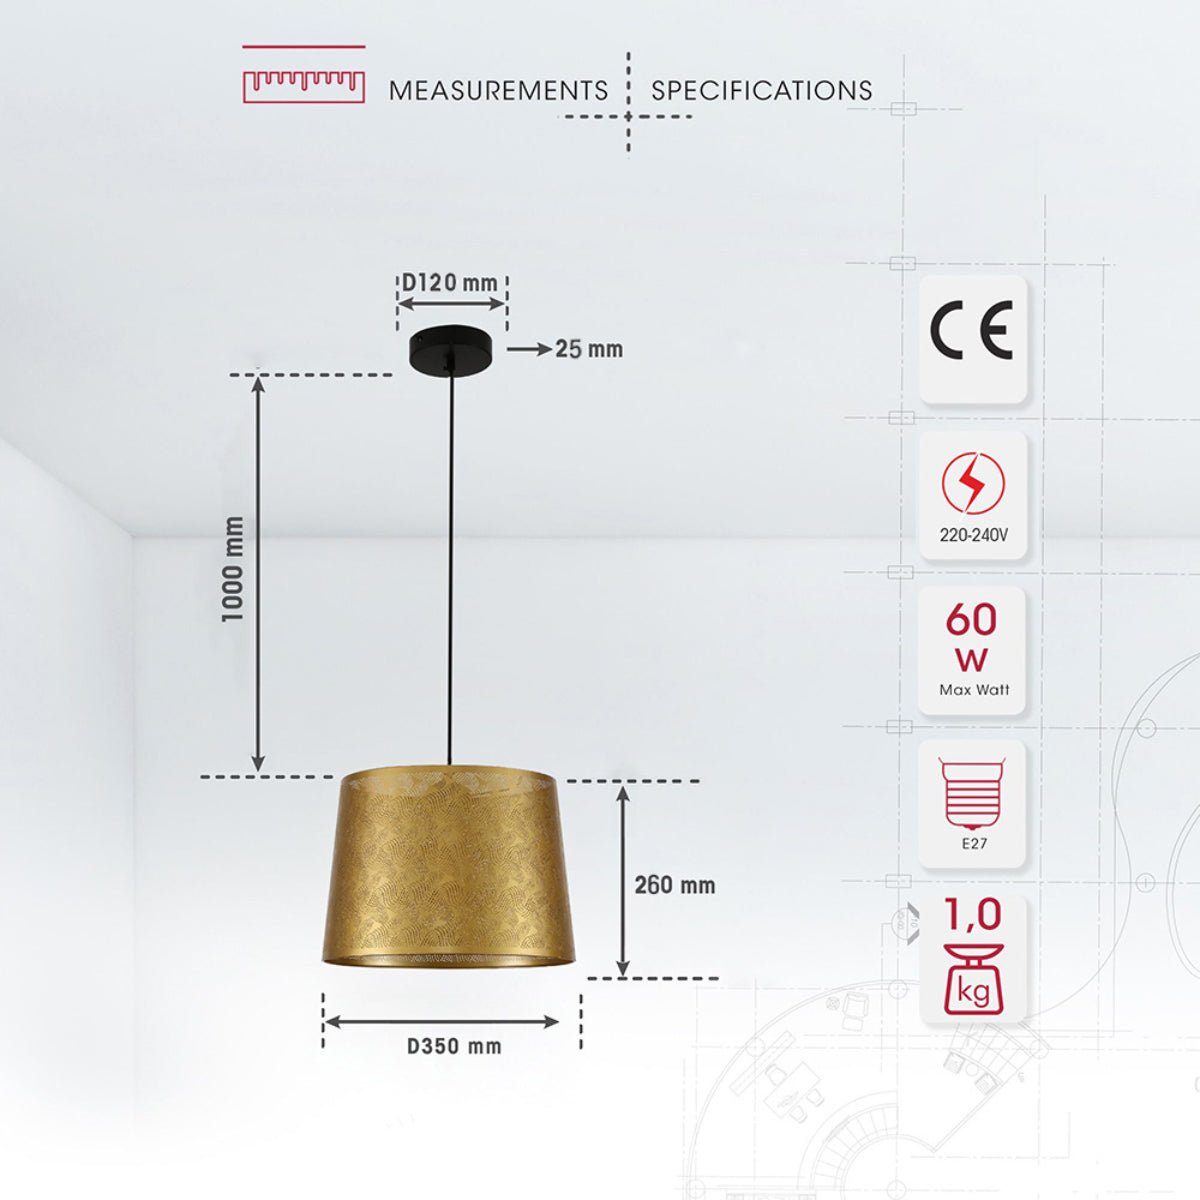 Size and specs of Golden Metal Frustum Pendant Ceiling Light with E27 | TEKLED 150-17978